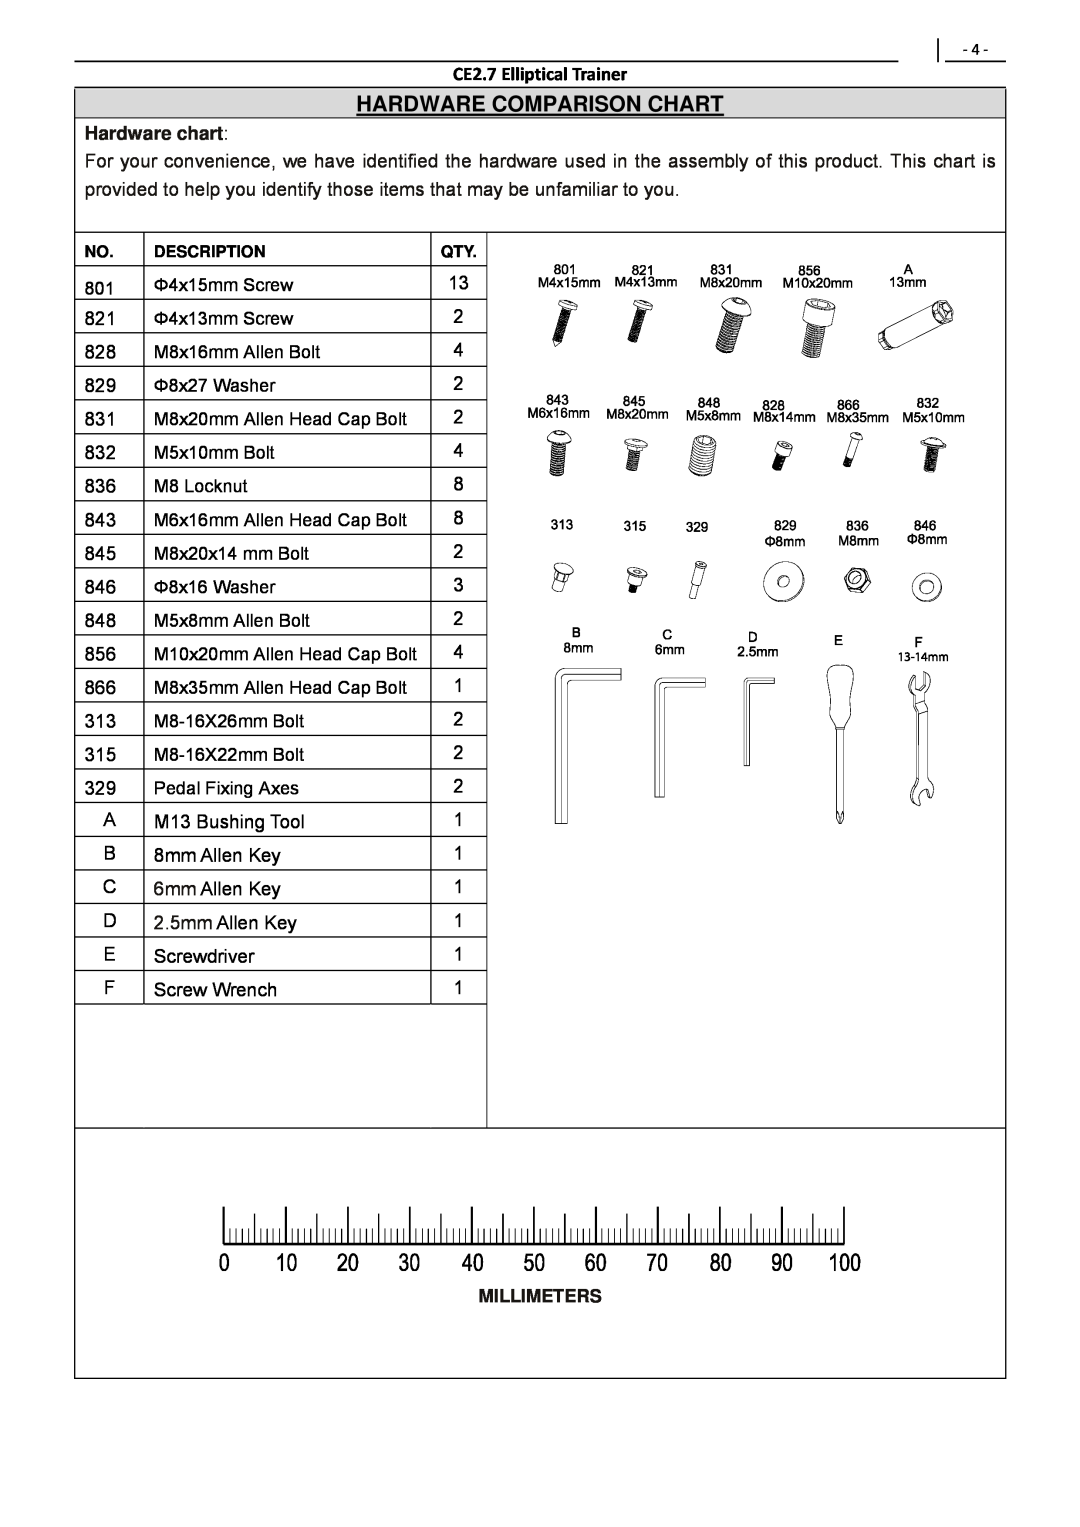 Polar user manual Hardware Comparison Chart, Hardware chart, CE2.7 Elliptical Trainer 